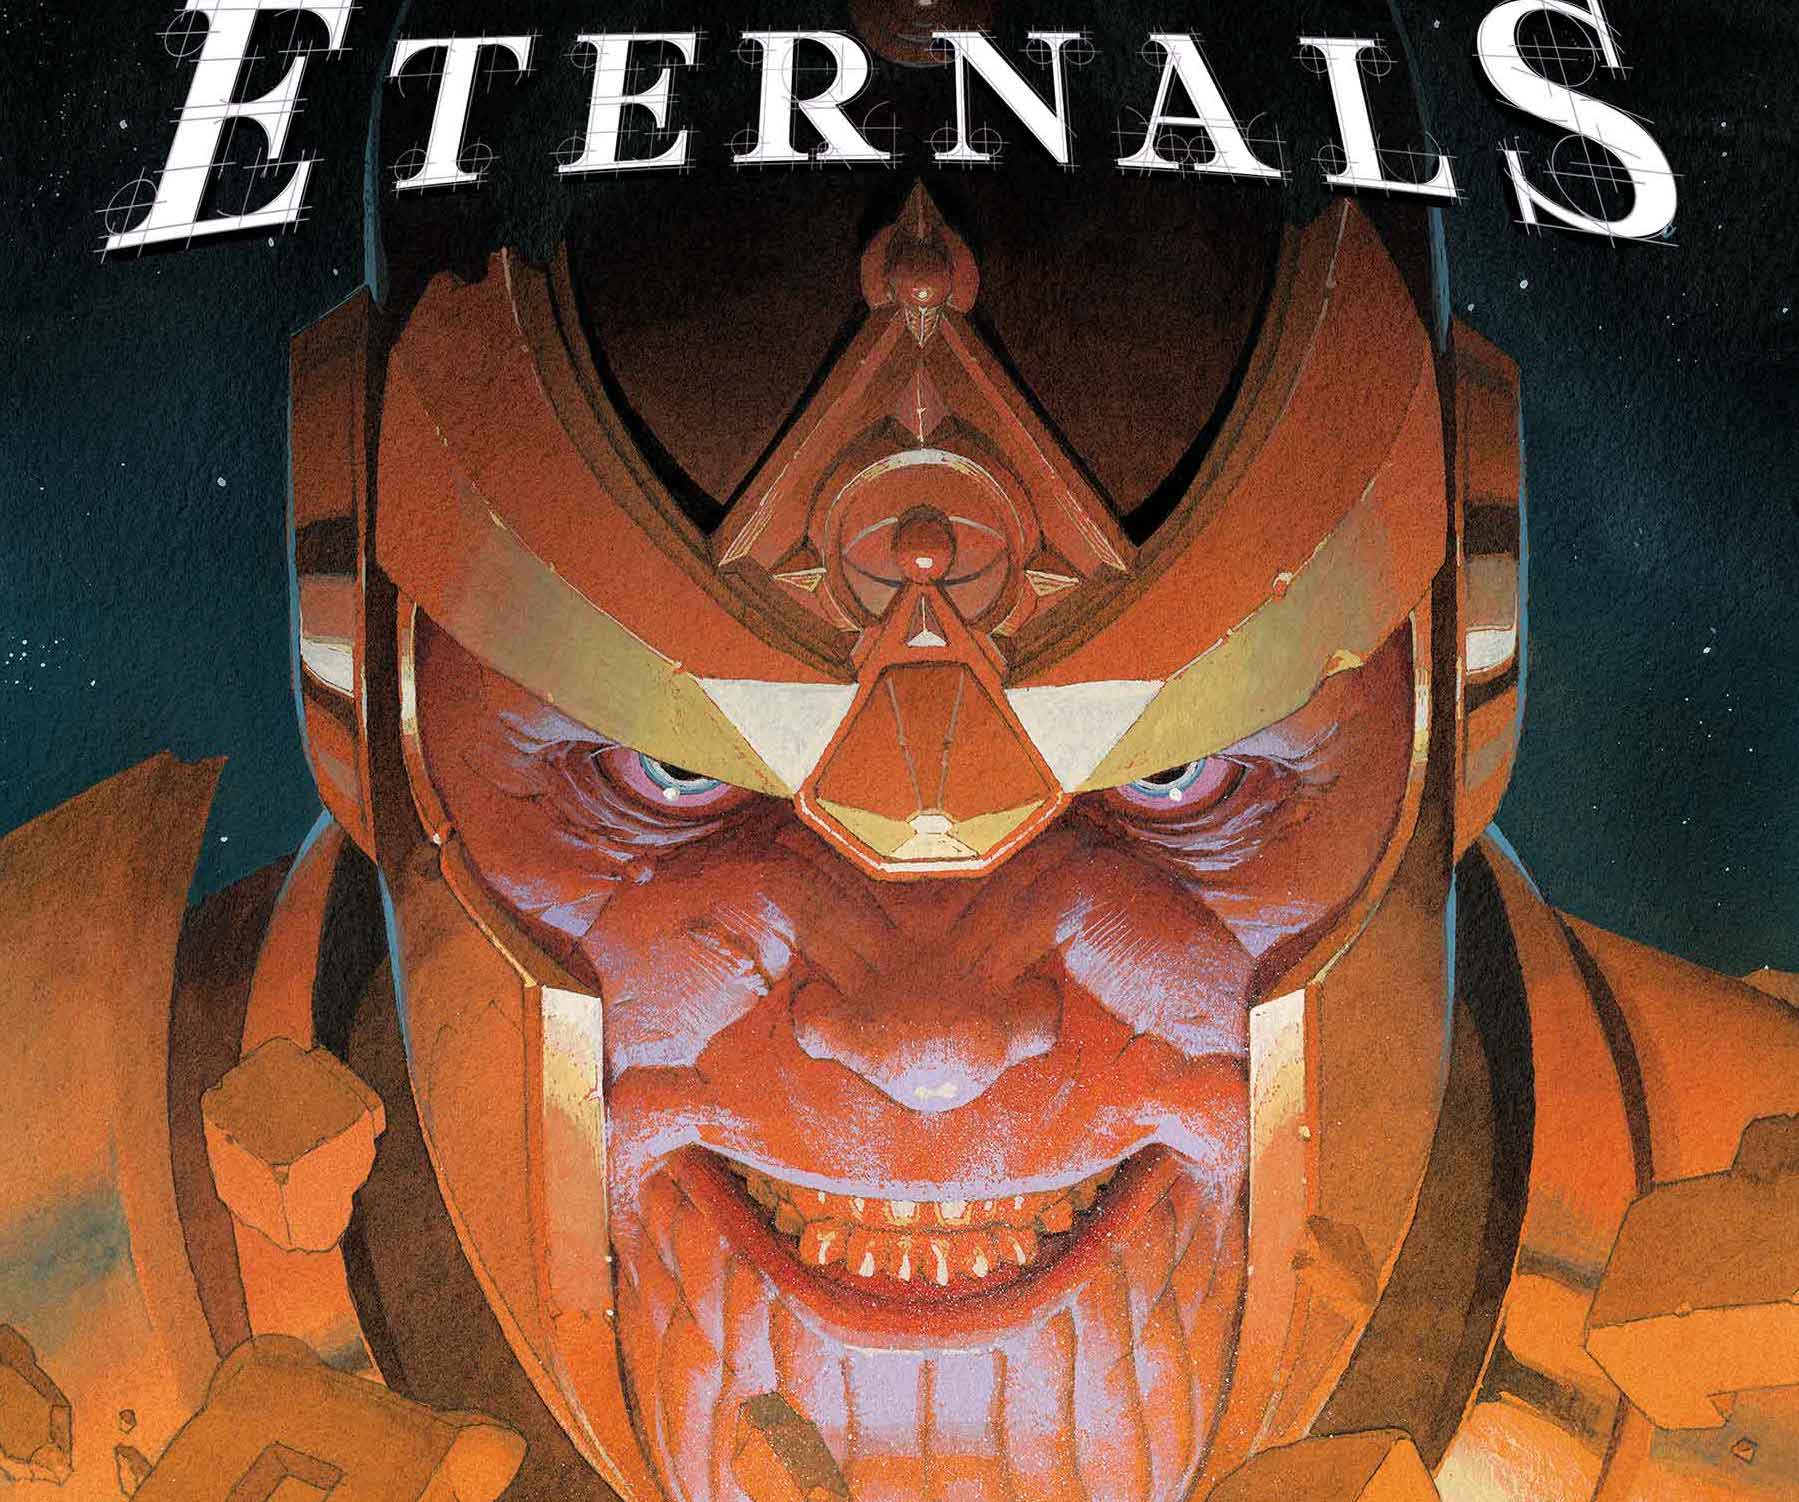 'Eternals' #2 features Thanos' evil grin out December 2020